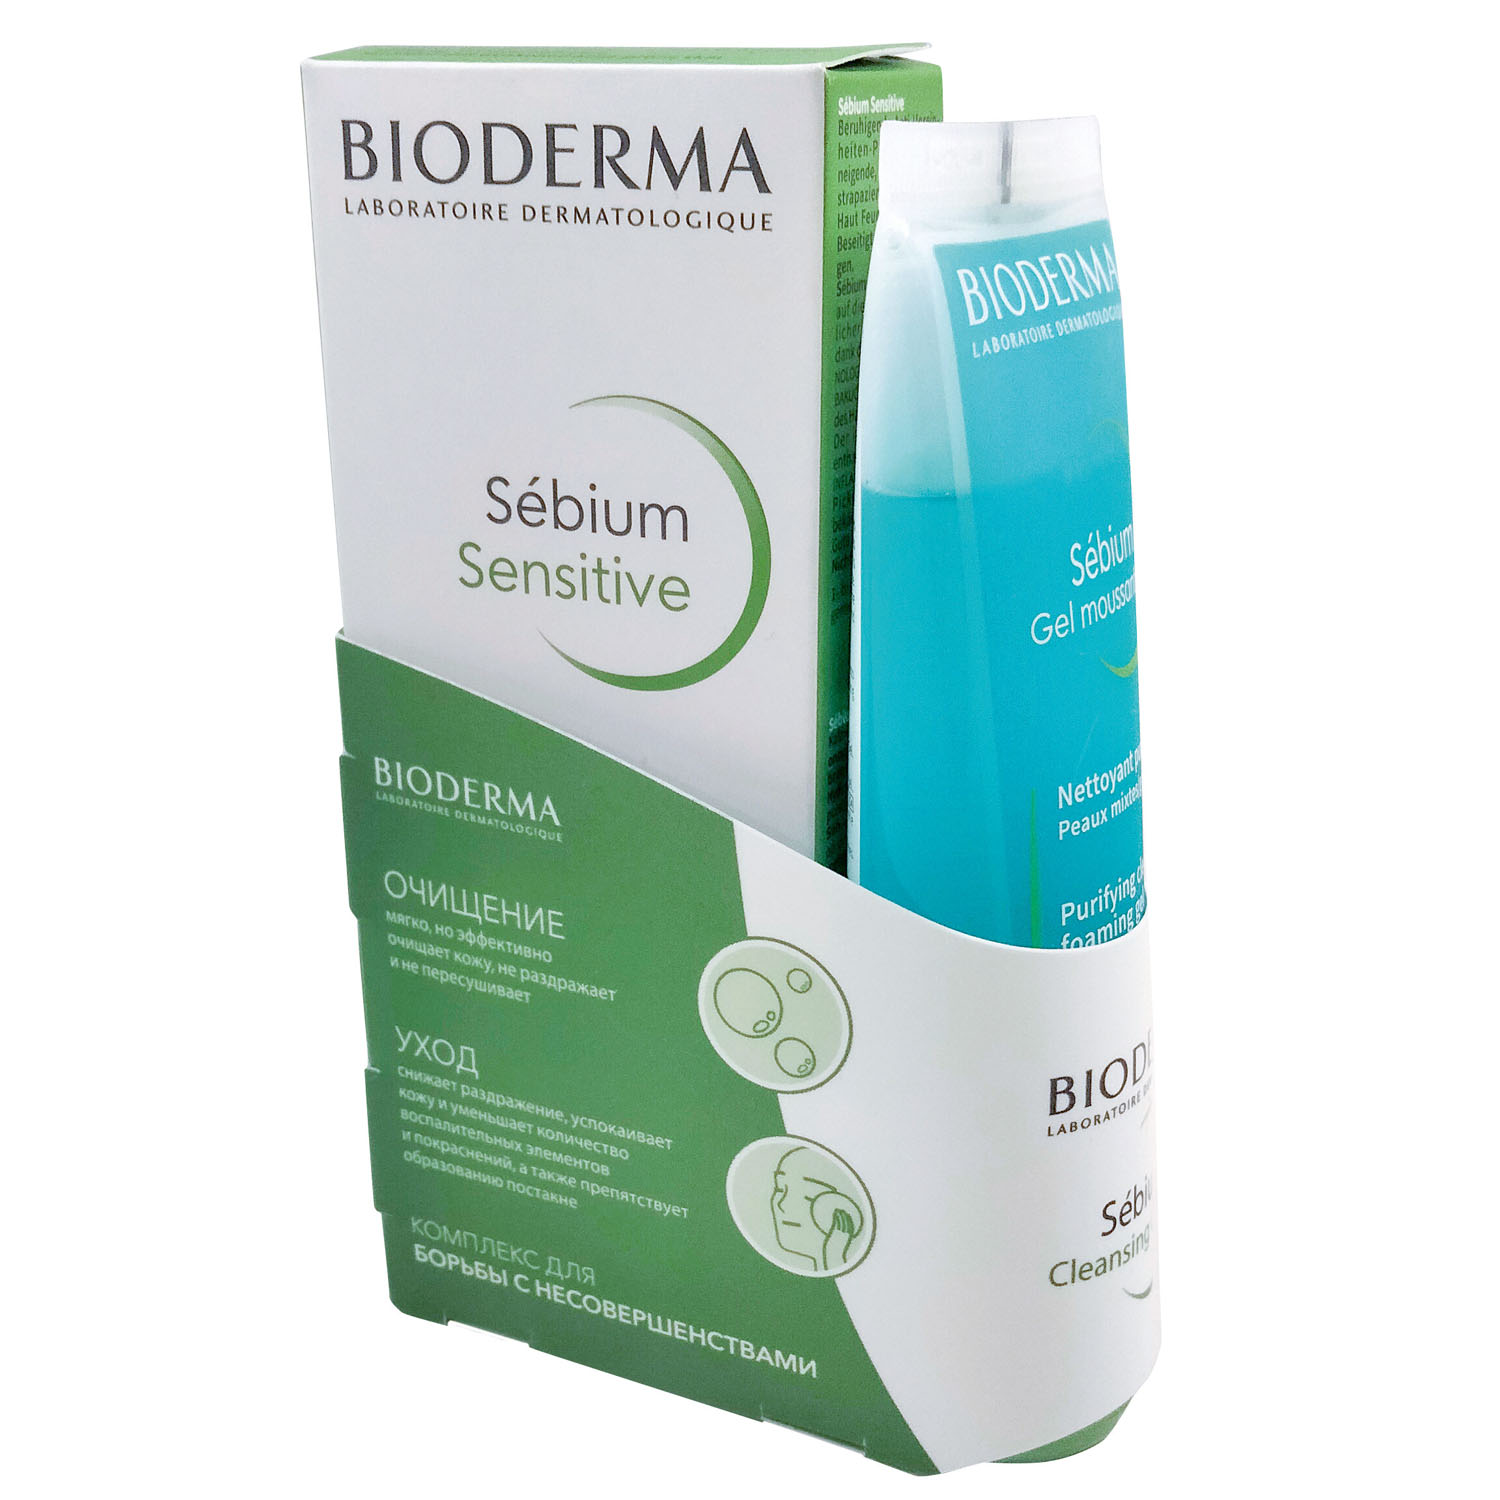 Bioderma Комплекс для борьбы с несовершенствами: крем-сенситив, 30 мл + гель, 45 мл (Bioderma, Sebium)